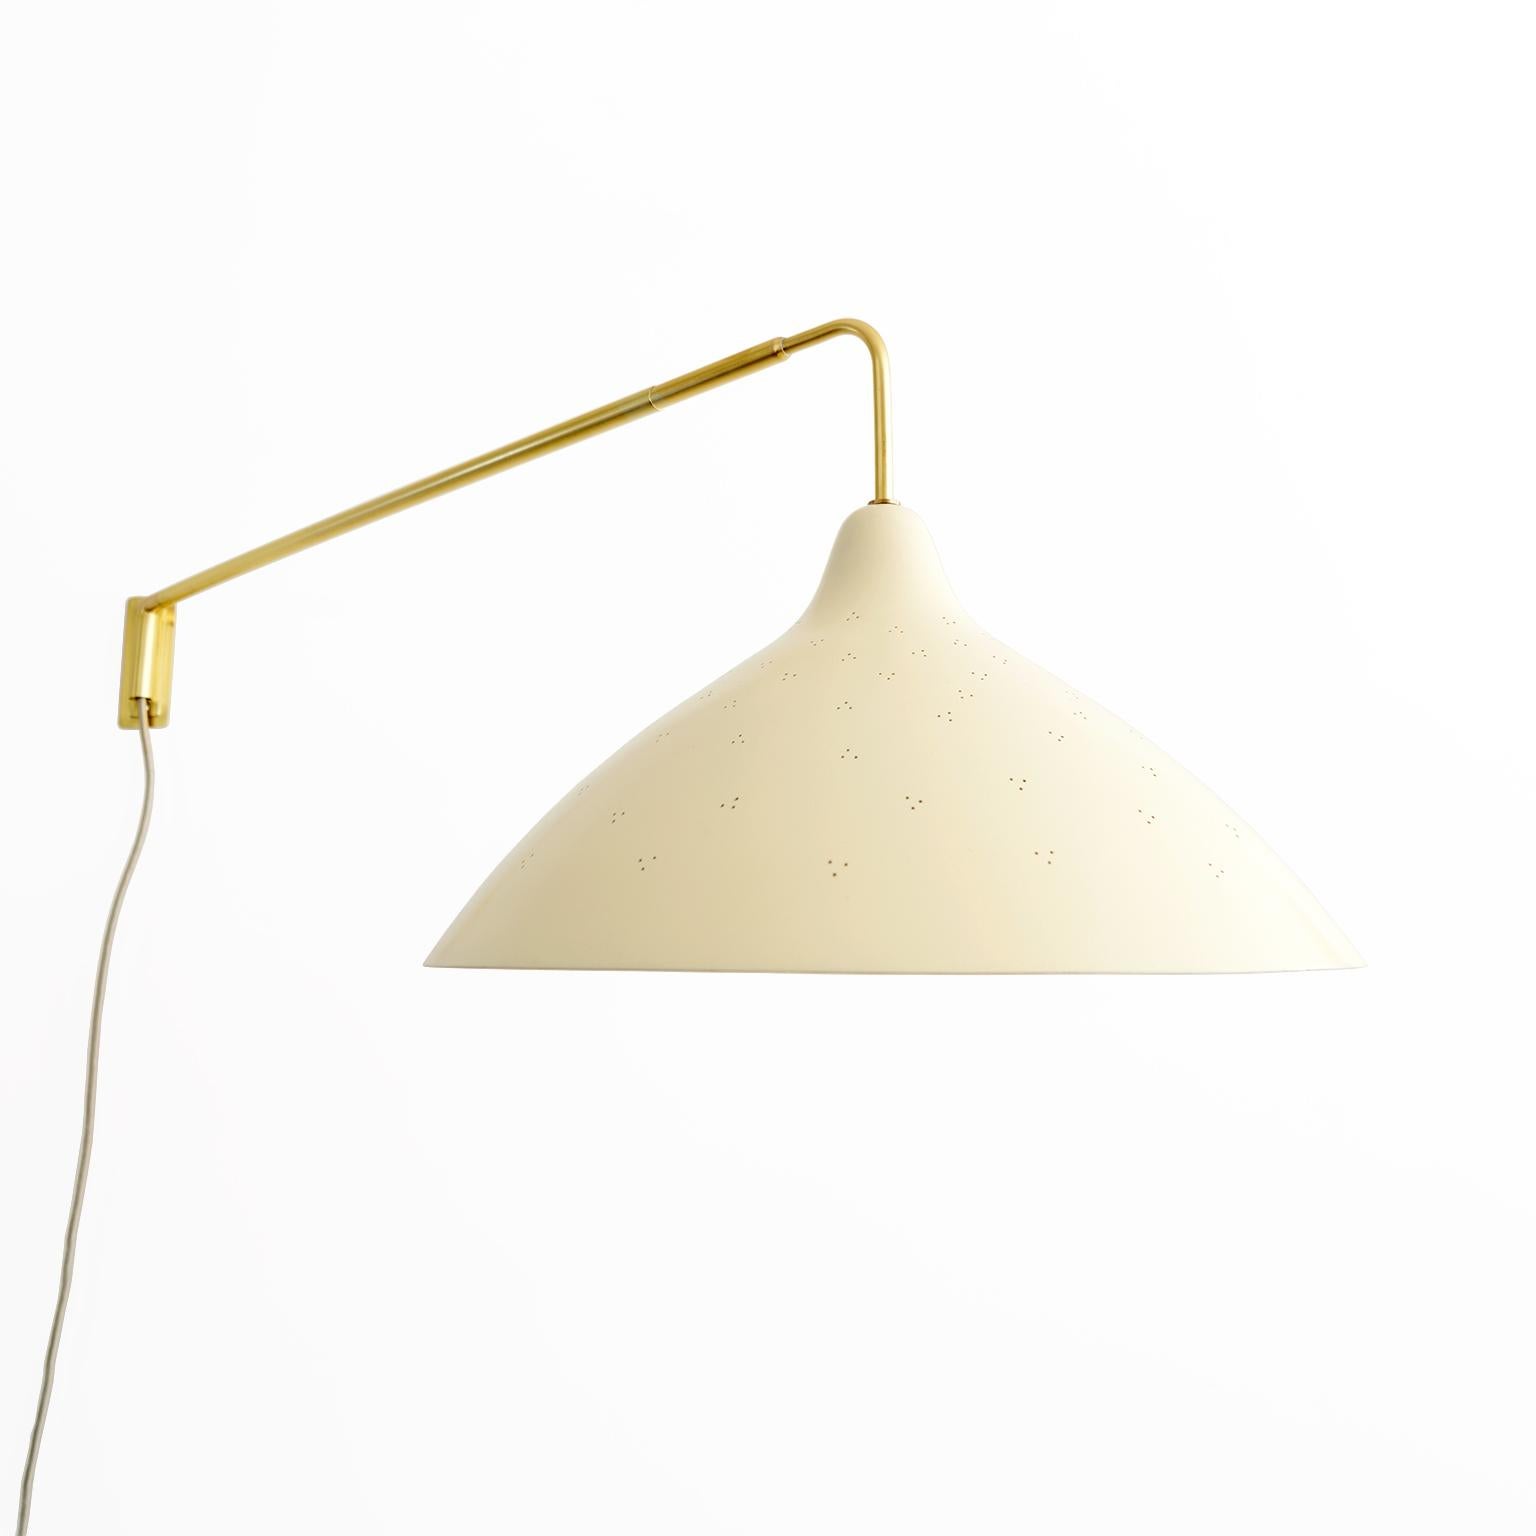 Scandinavian Modern Lisa Johansson-Pape Adjustable Wall Mount Swing Arm Lamp Orno Finland For Sale